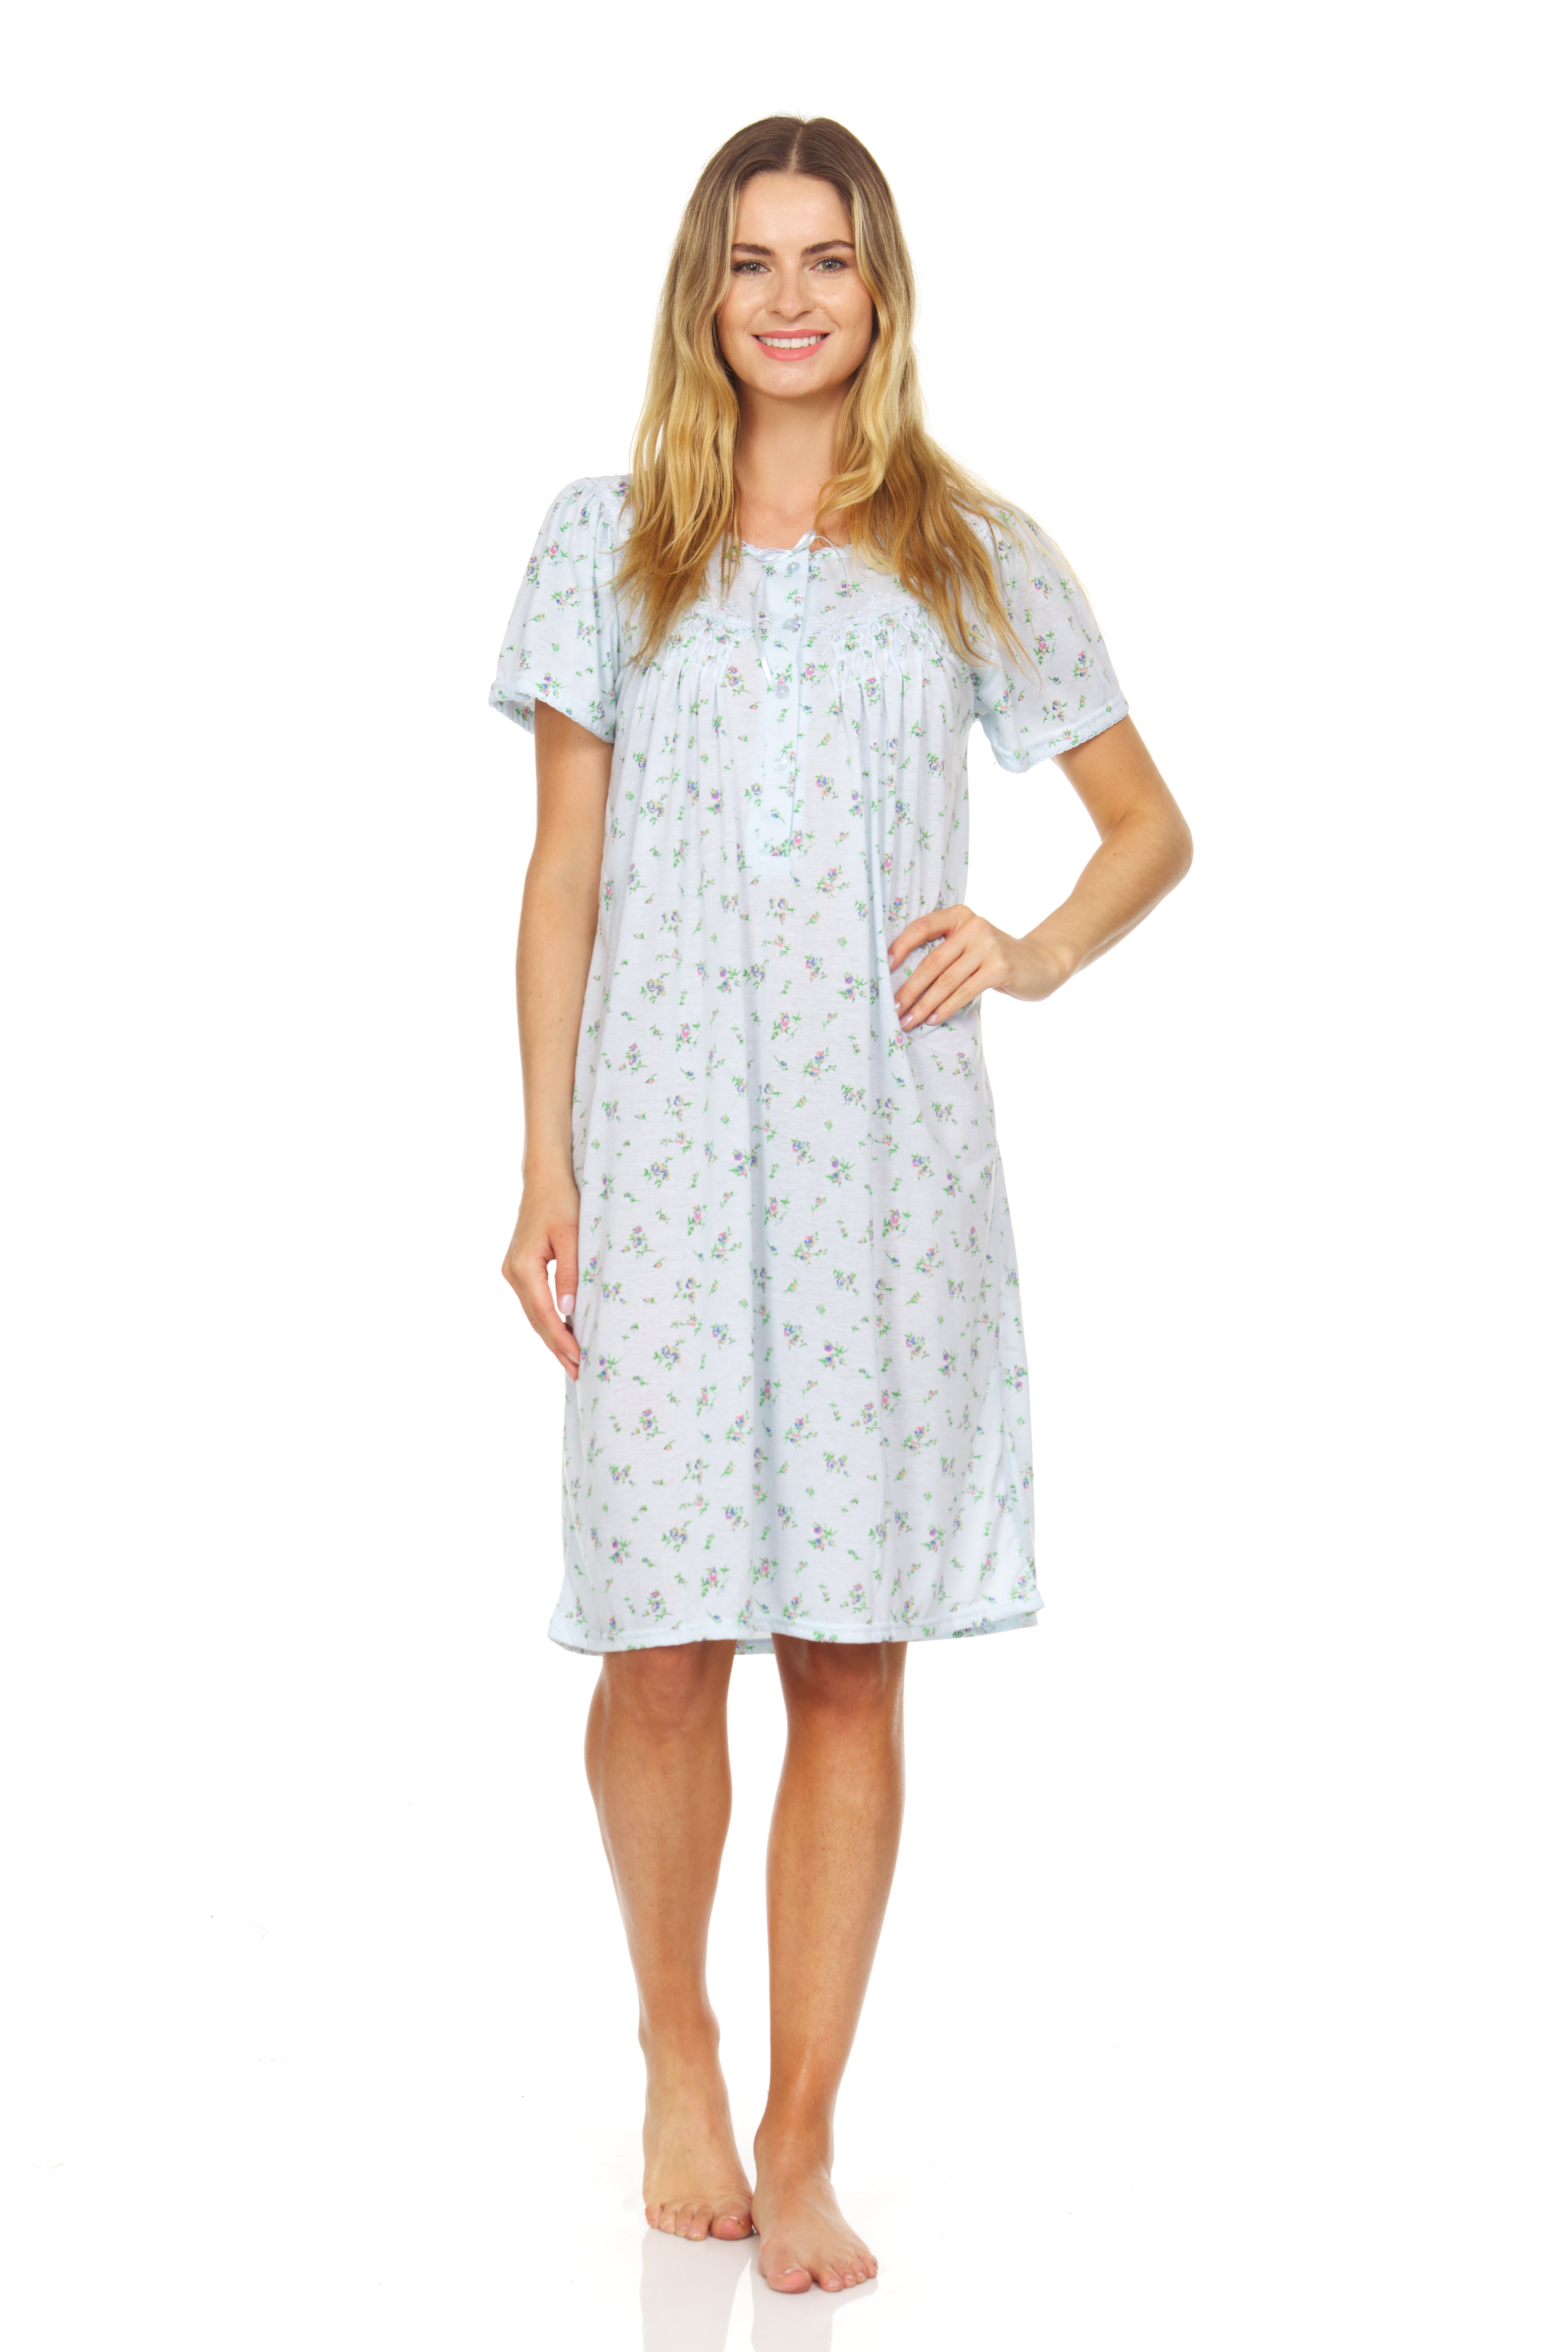 00136 Women Nightgown Sleepwear Pajamas Short Sleeve Sleep Dress Nightshirt Blue S